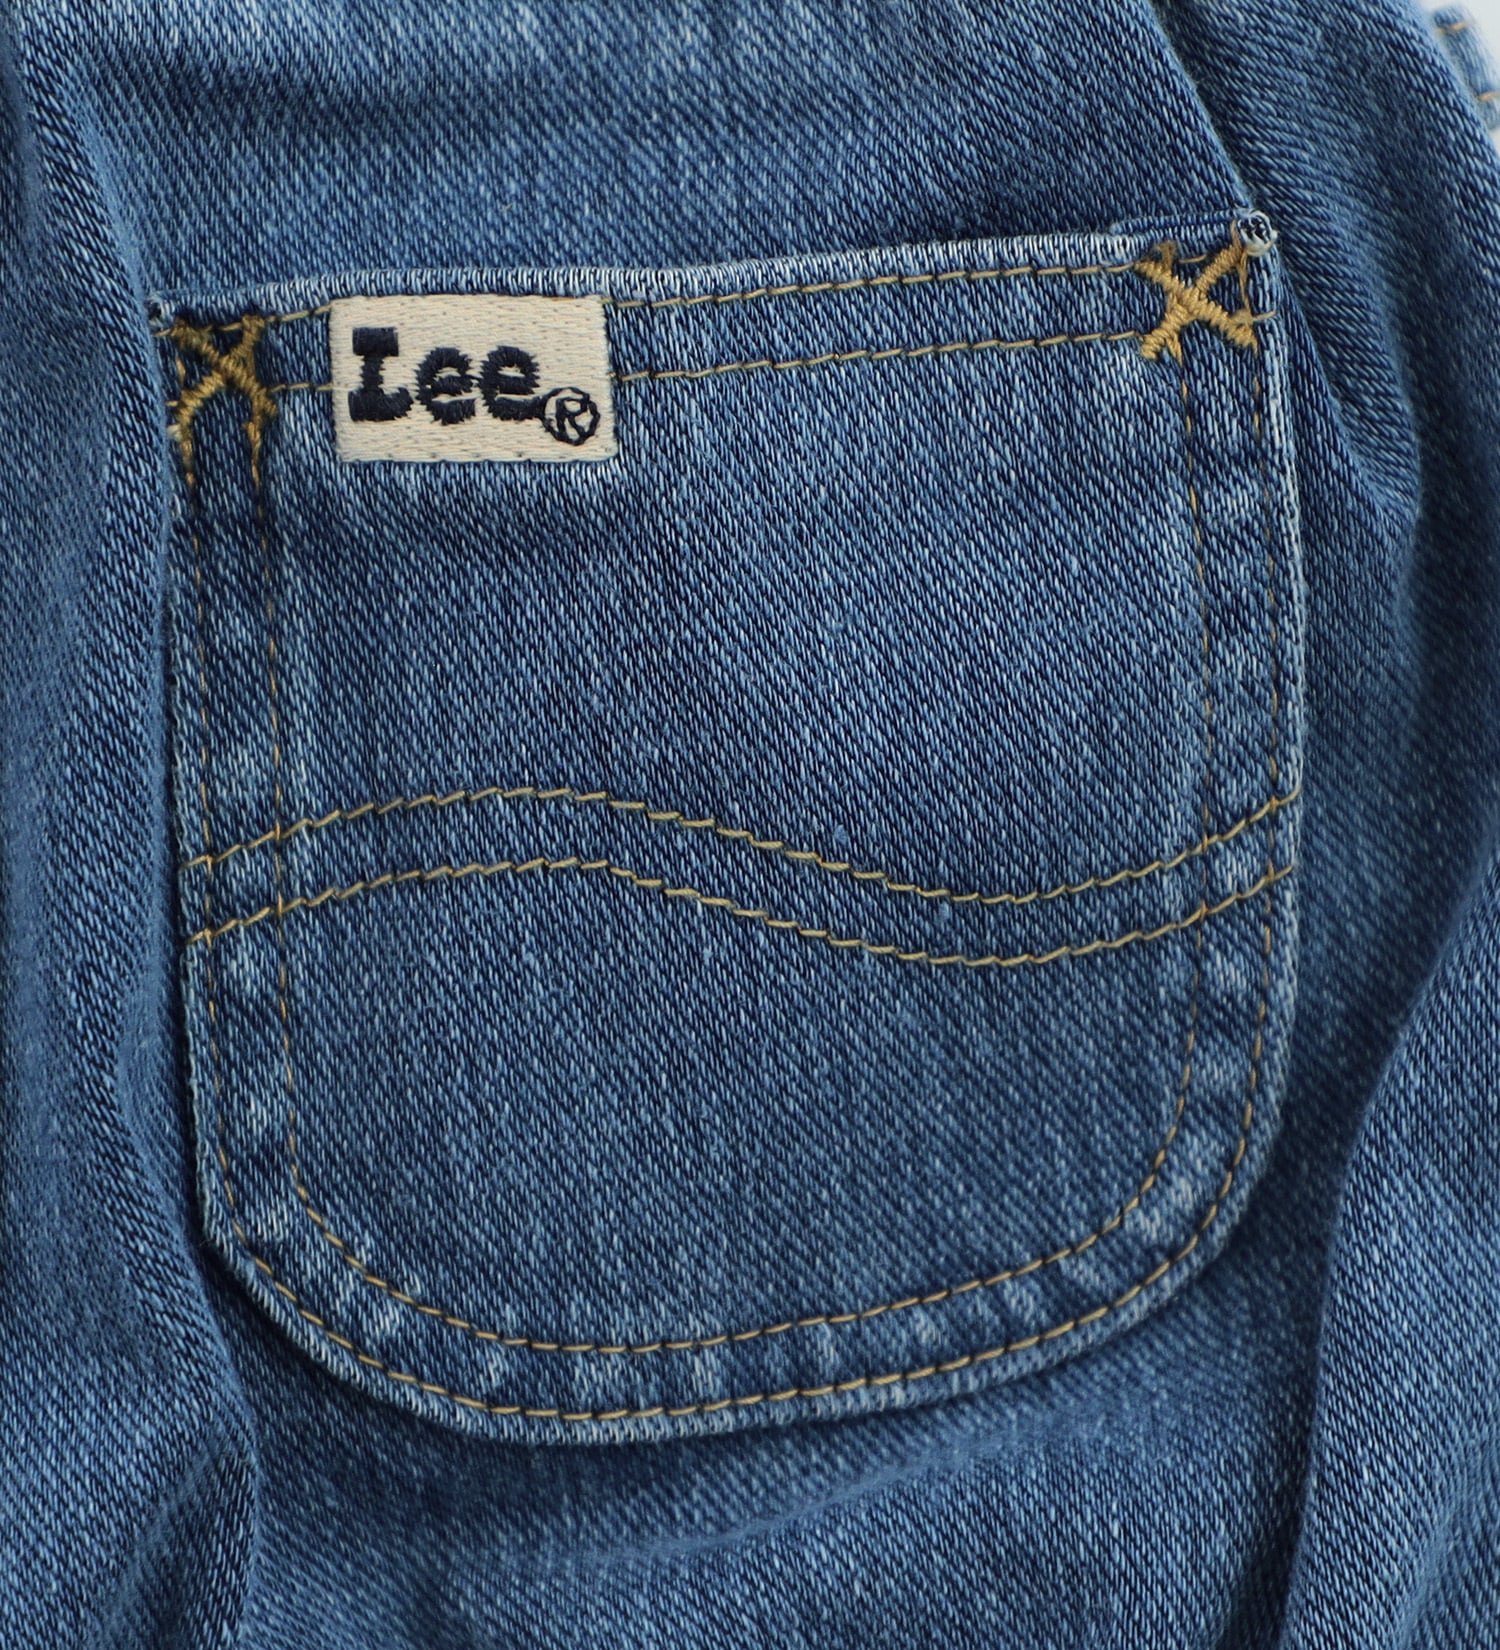 Lee(リー)の【80/90cm】ベビー ニットデニム ブルマーショーツ|マタニティ/ベビー/ベビー用品/キッズ|淡色ブルー